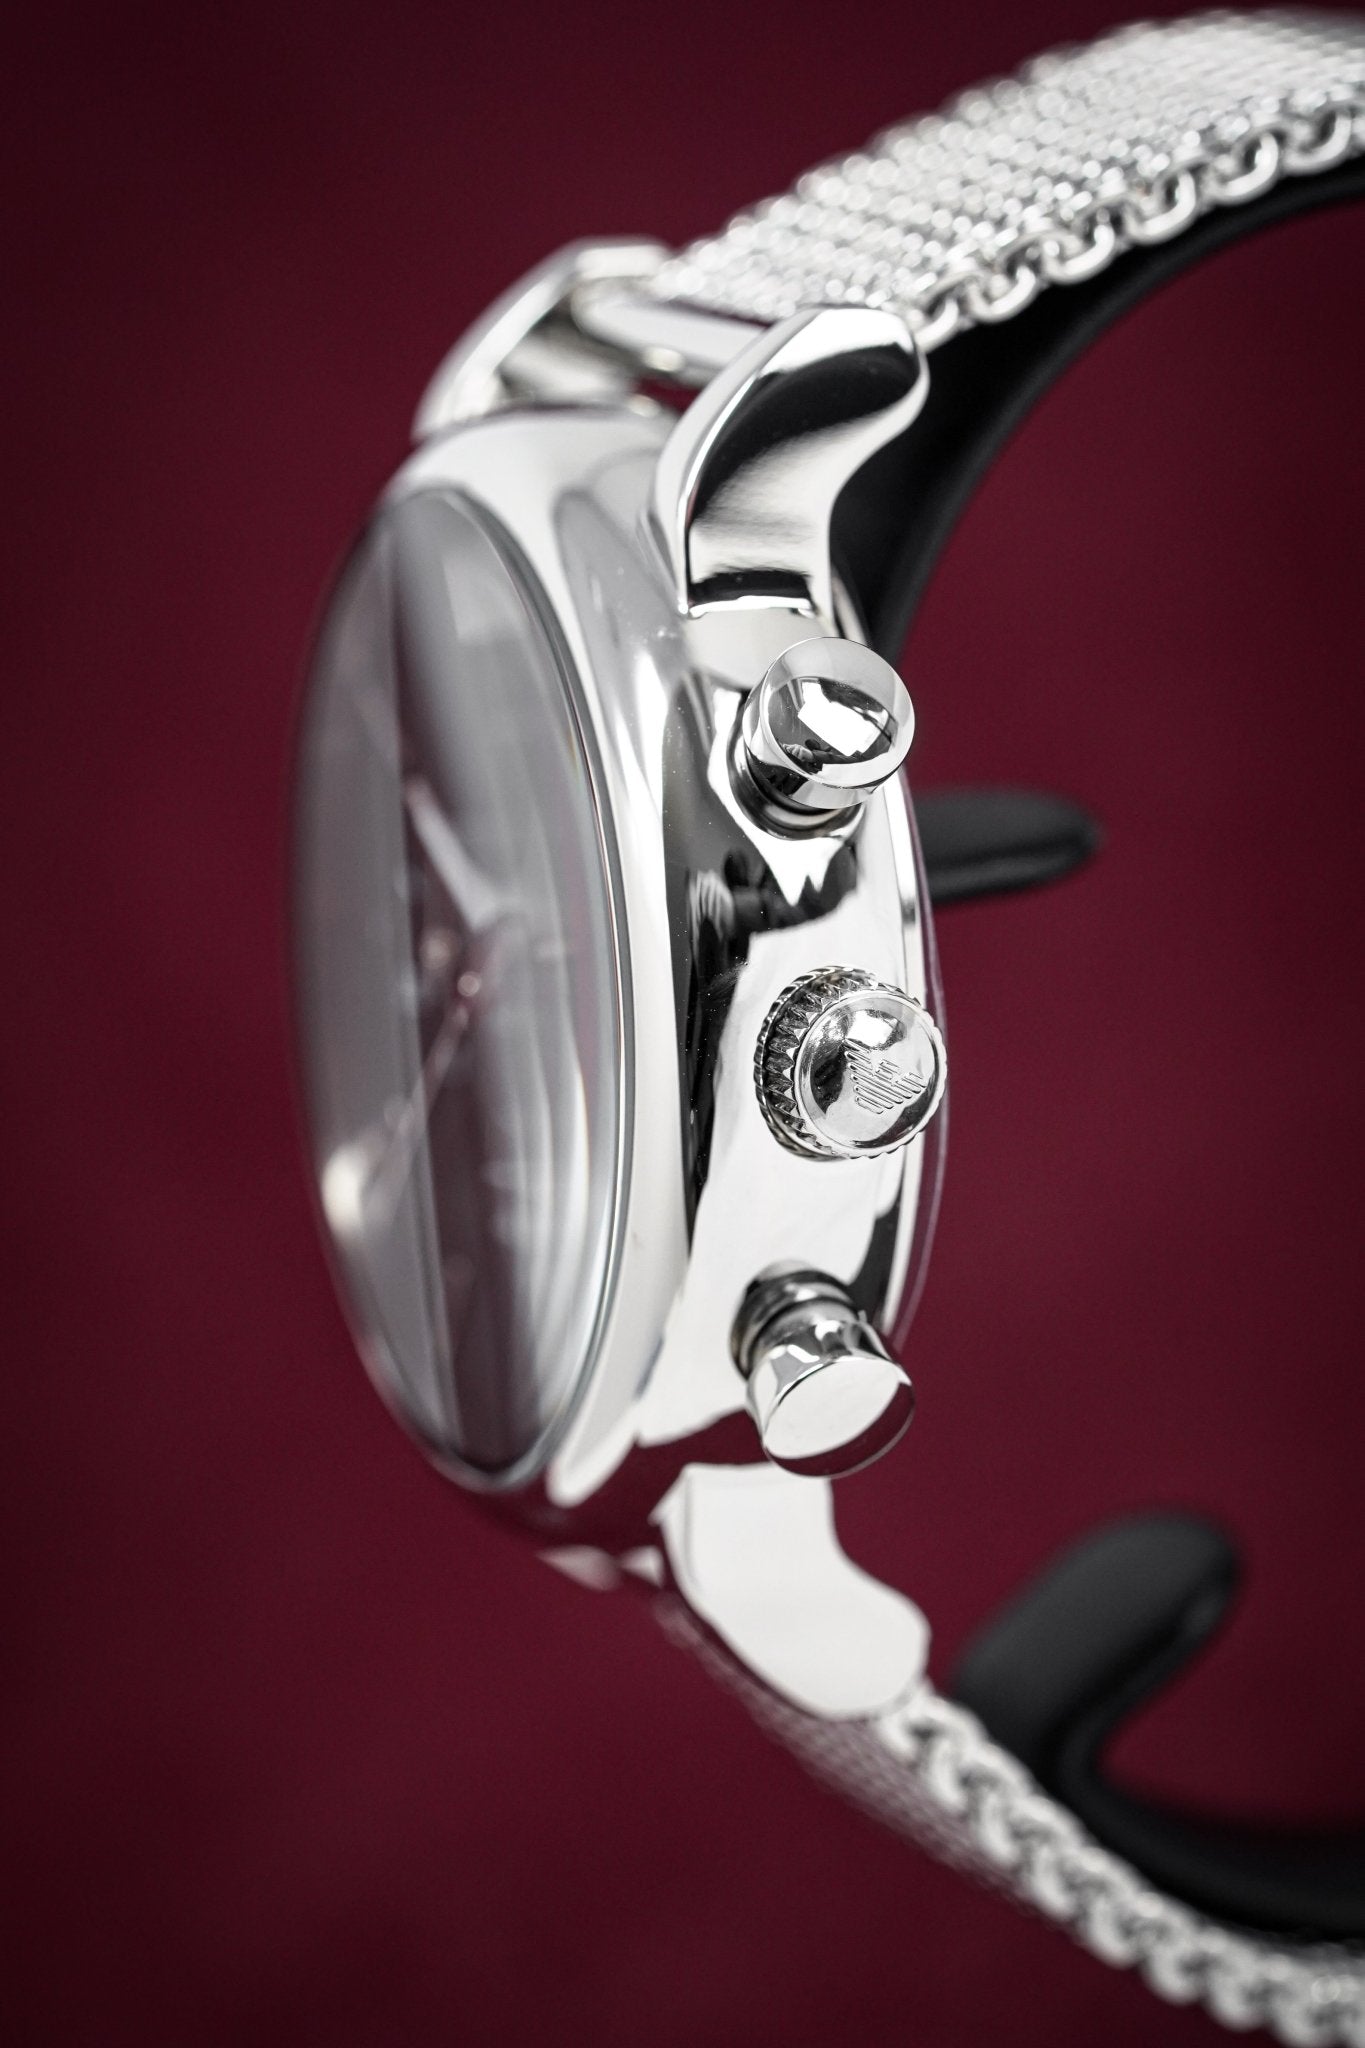 Emporio Armani Men's Luigi Chronograph Watch Mesh AR1811 - Watches & Crystals